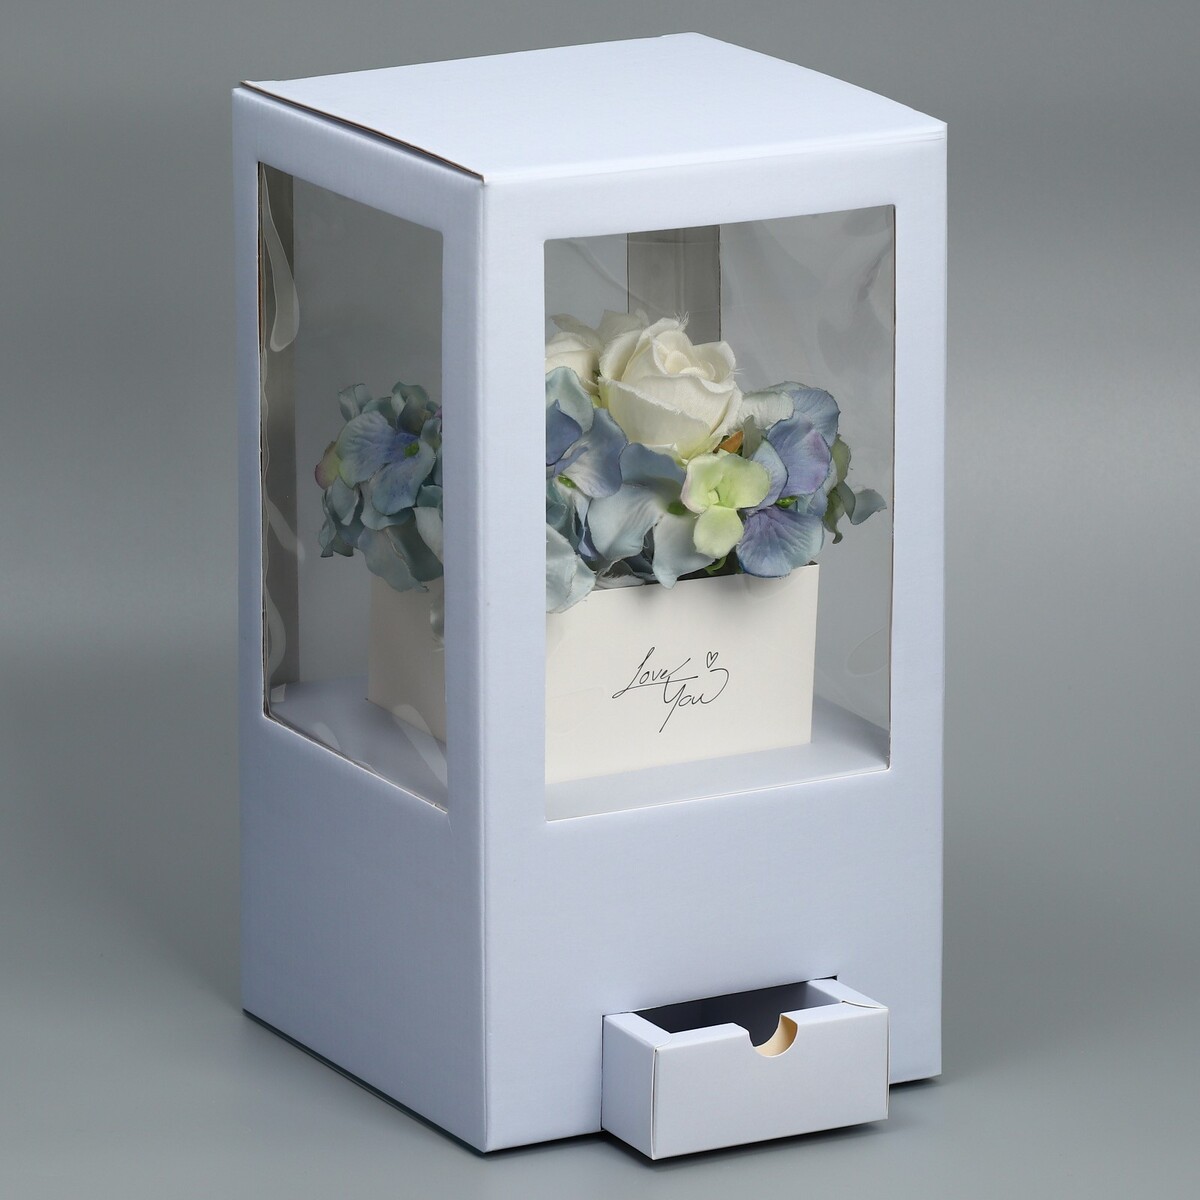 Коробка подарочная для цветов с вазой из мгк складная, упаковка, коробка для ов с вазой и pvc окнами складная 23 х 30 х 23 см